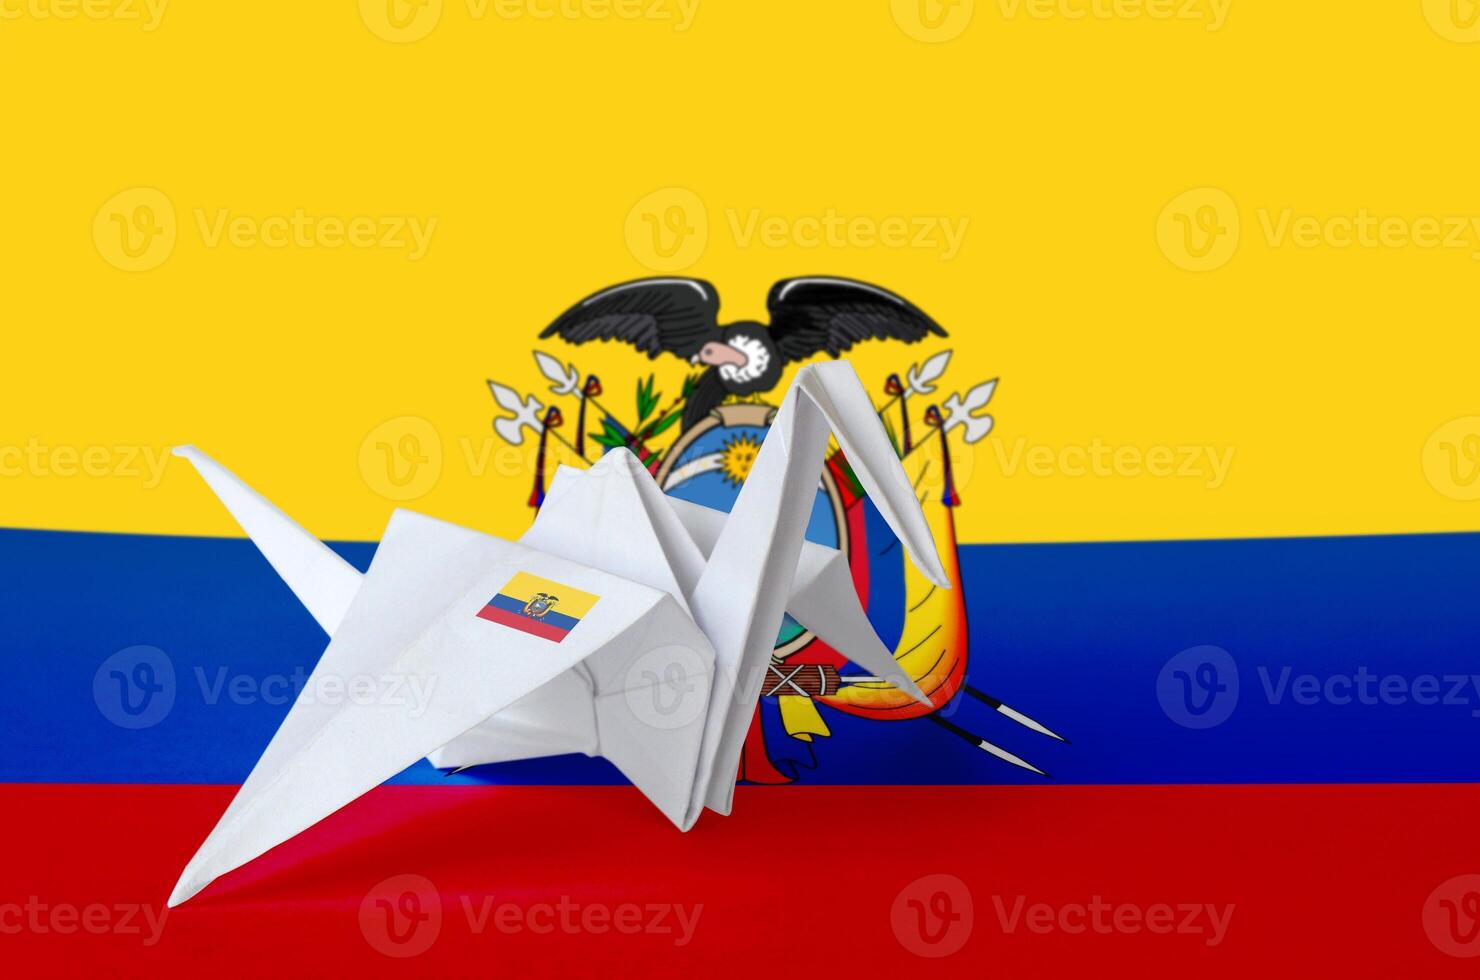 Ecuador flag depicted on paper origami crane wing. Handmade arts concept photo